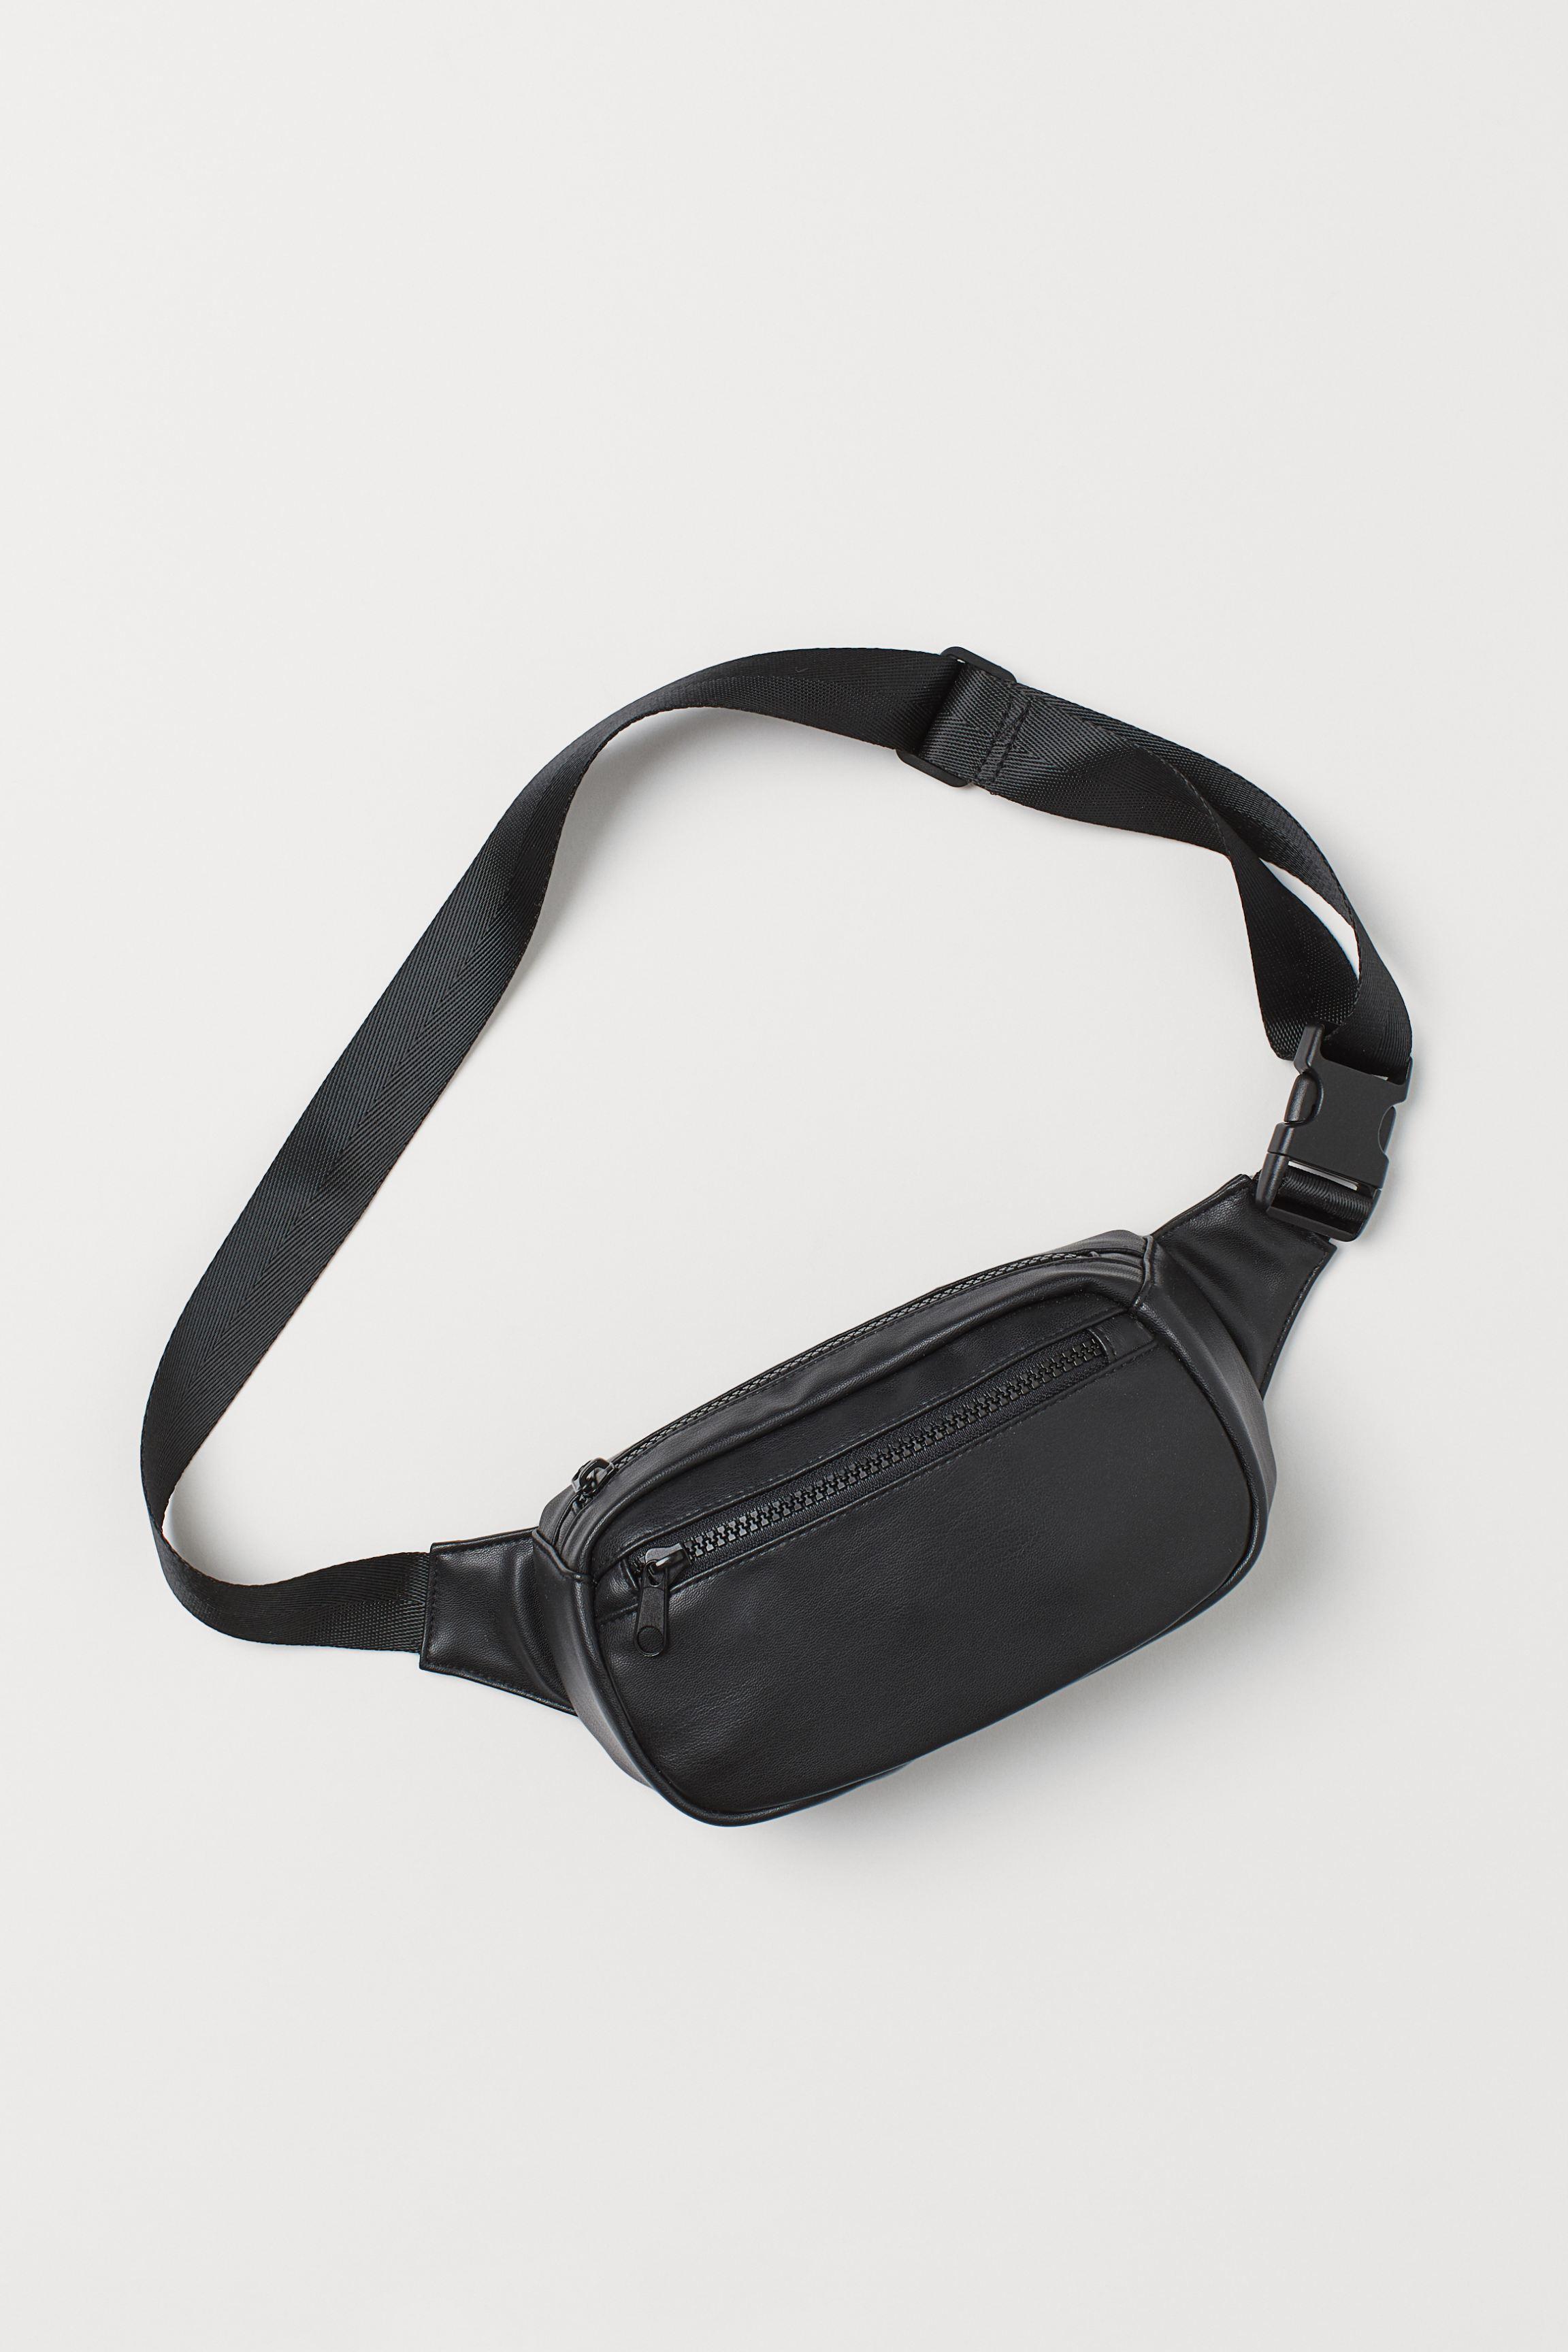 H&M Waist Bag in Black - Lyst